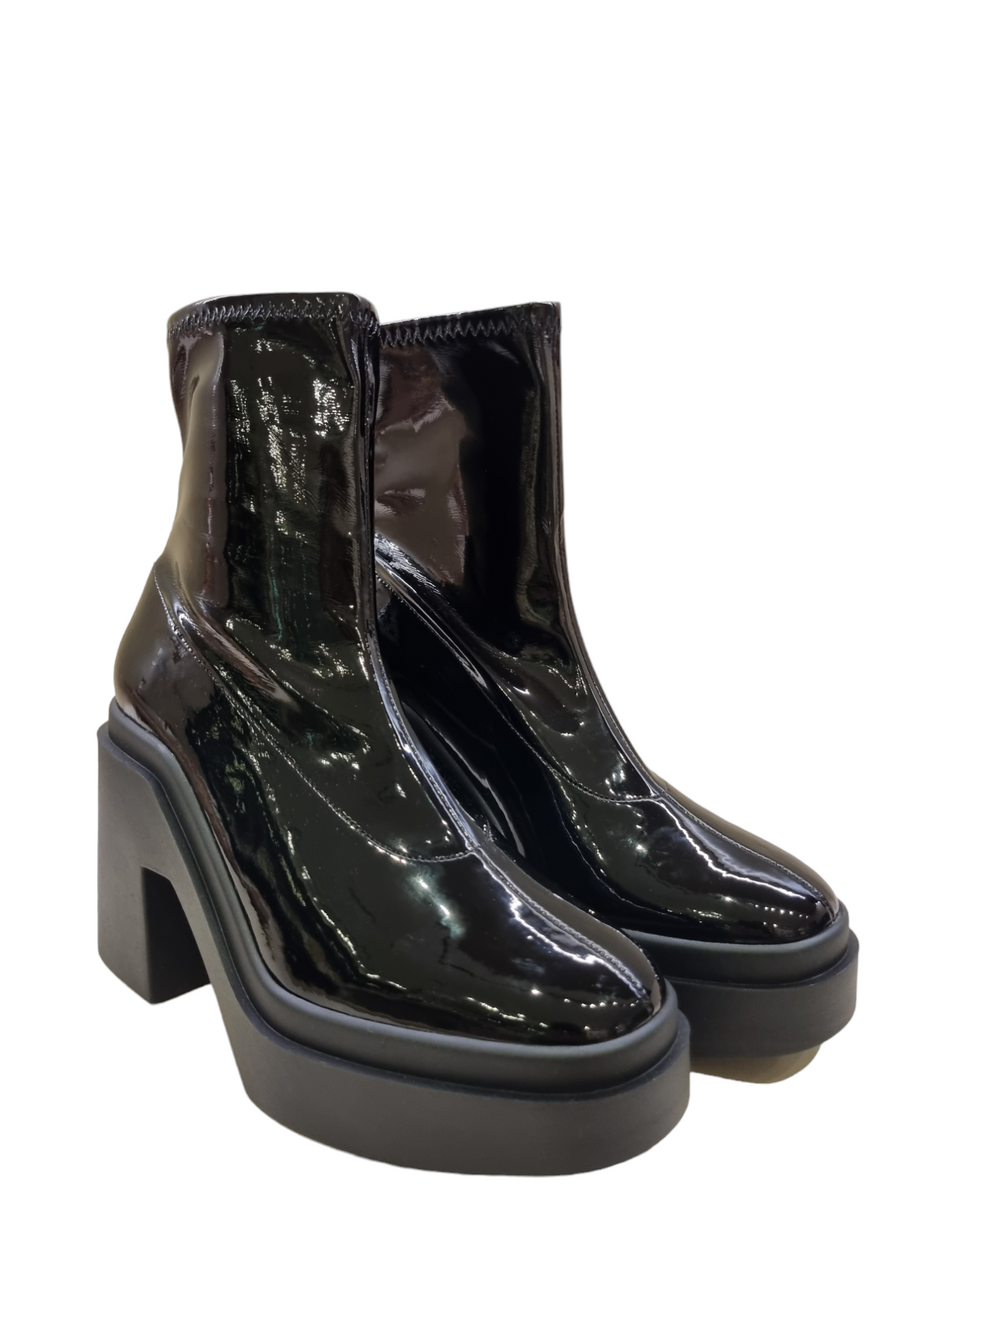 Nina Patent Black Boots - Clergerie - Liberty Shoes Australia